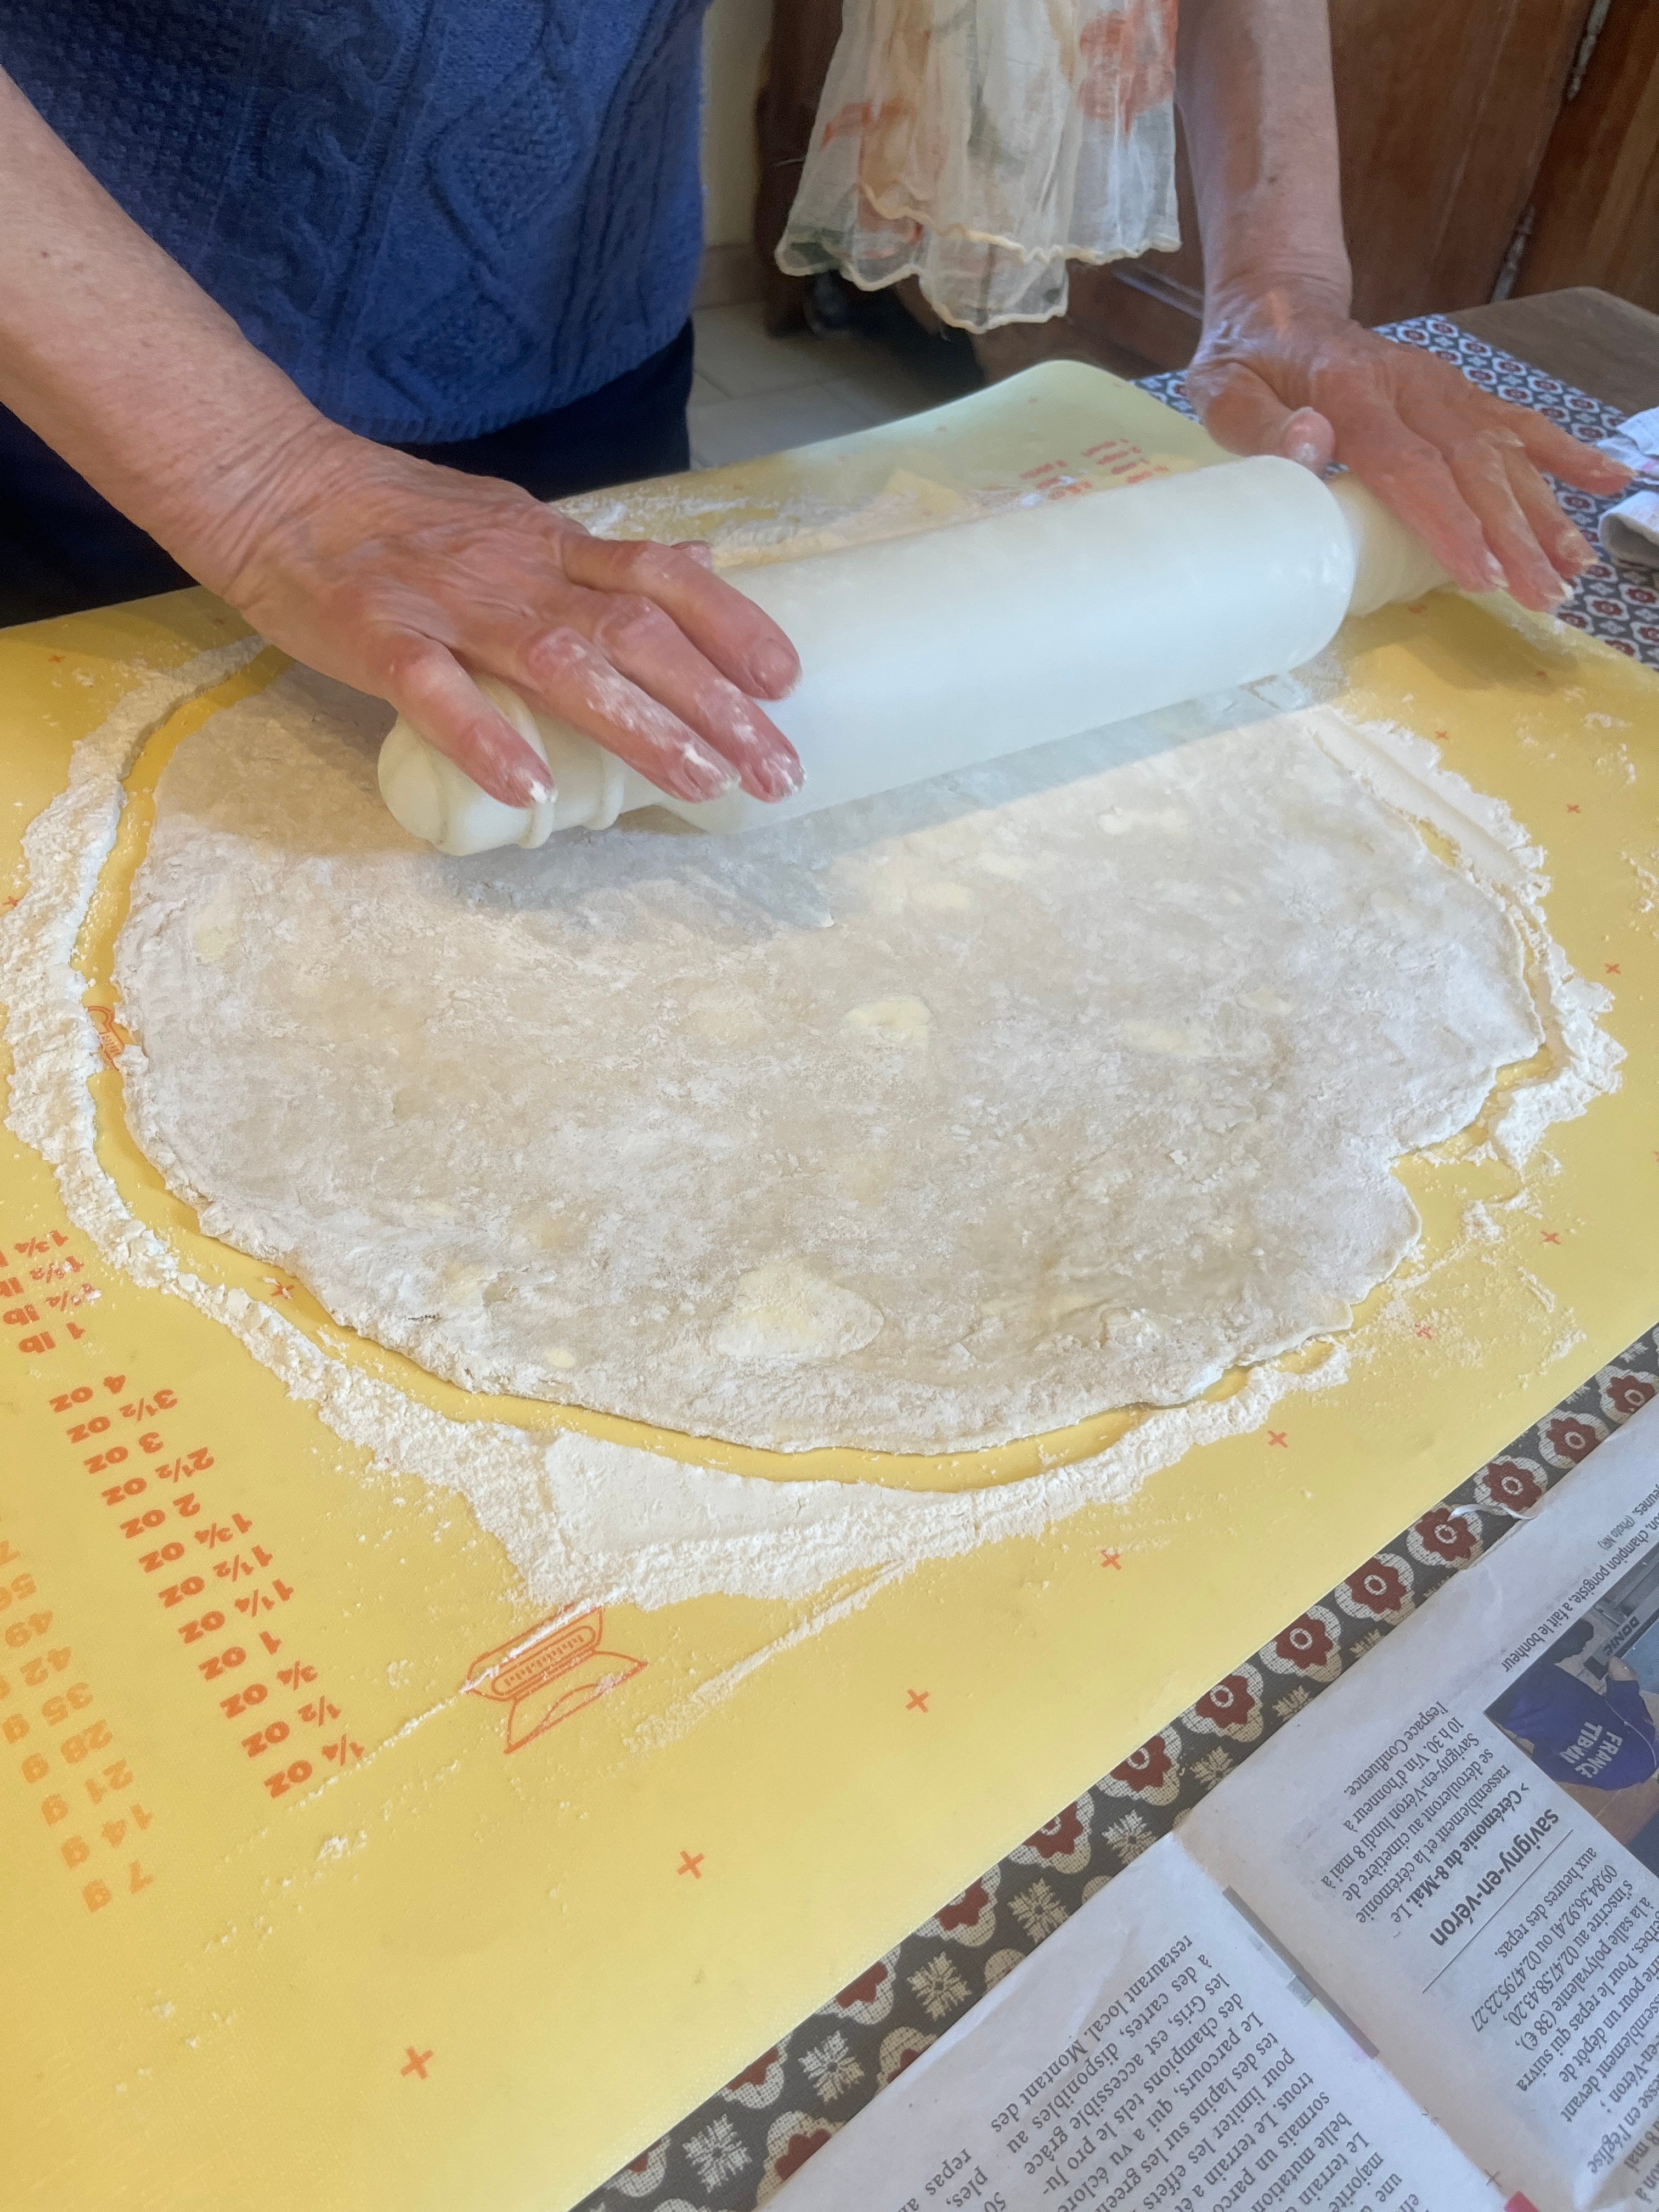 Natural Stone Pastry Board (28 cm diameter) 